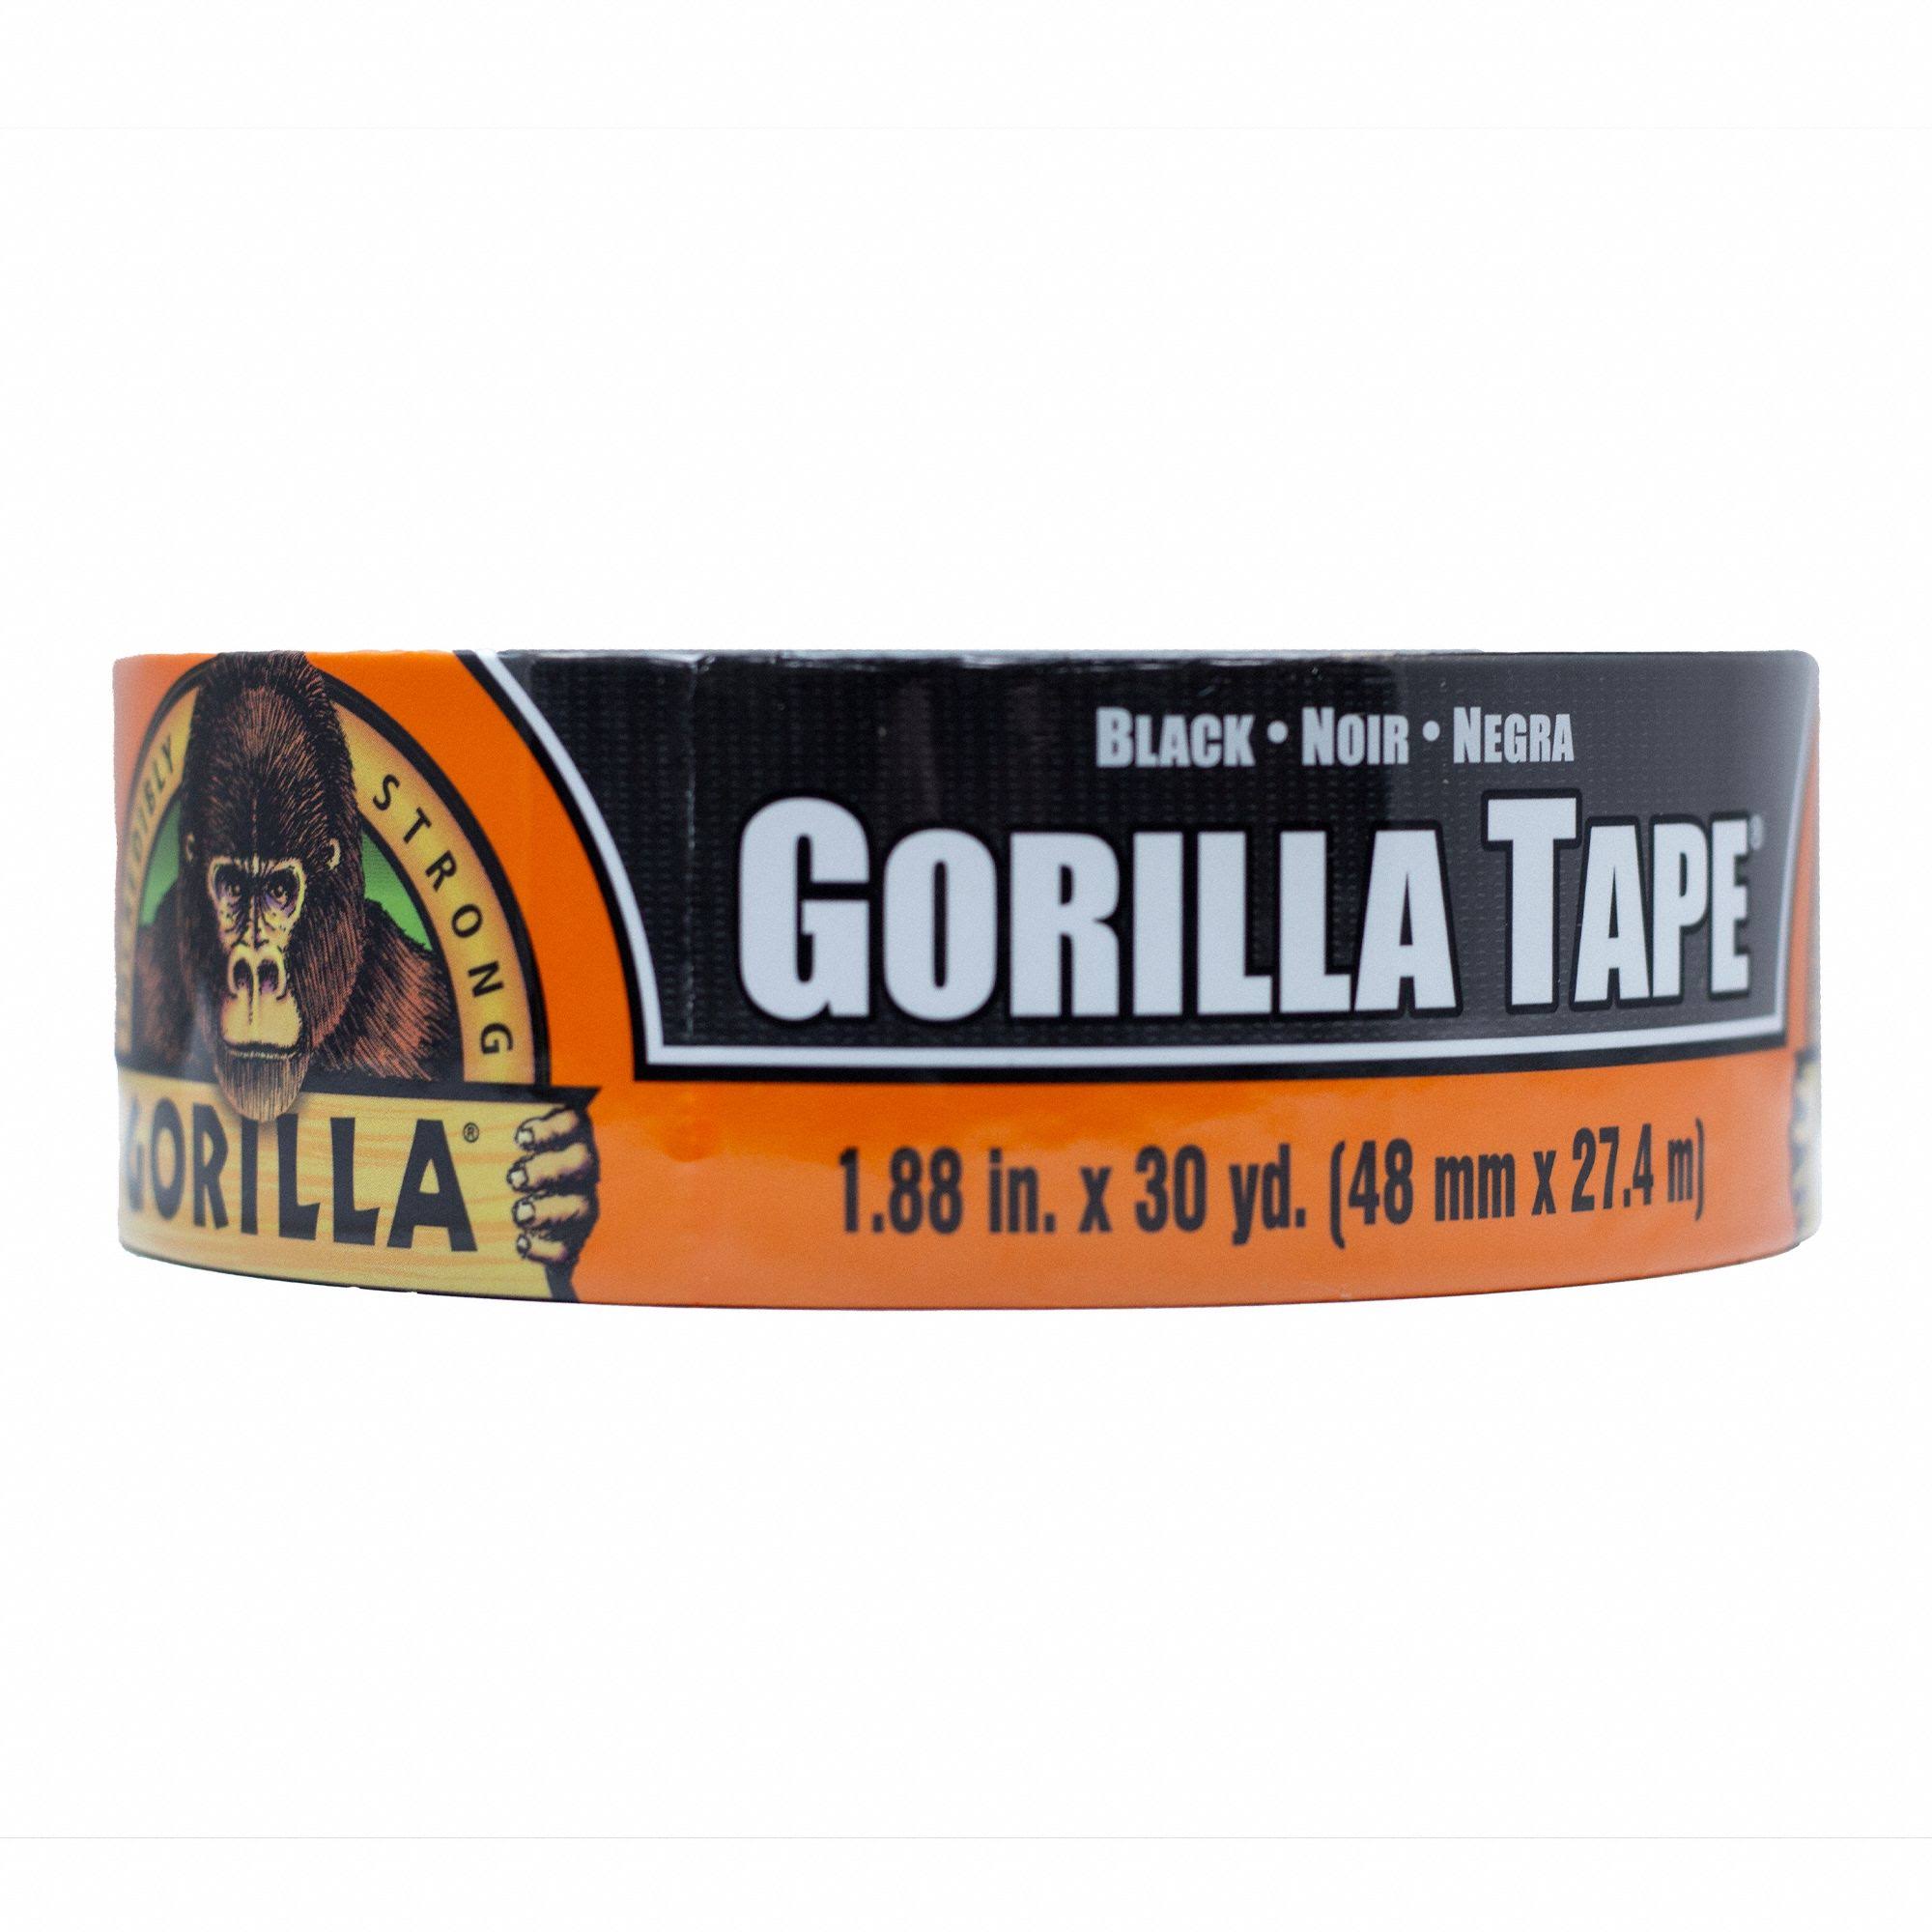 Gorilla Black Tape 30 yd